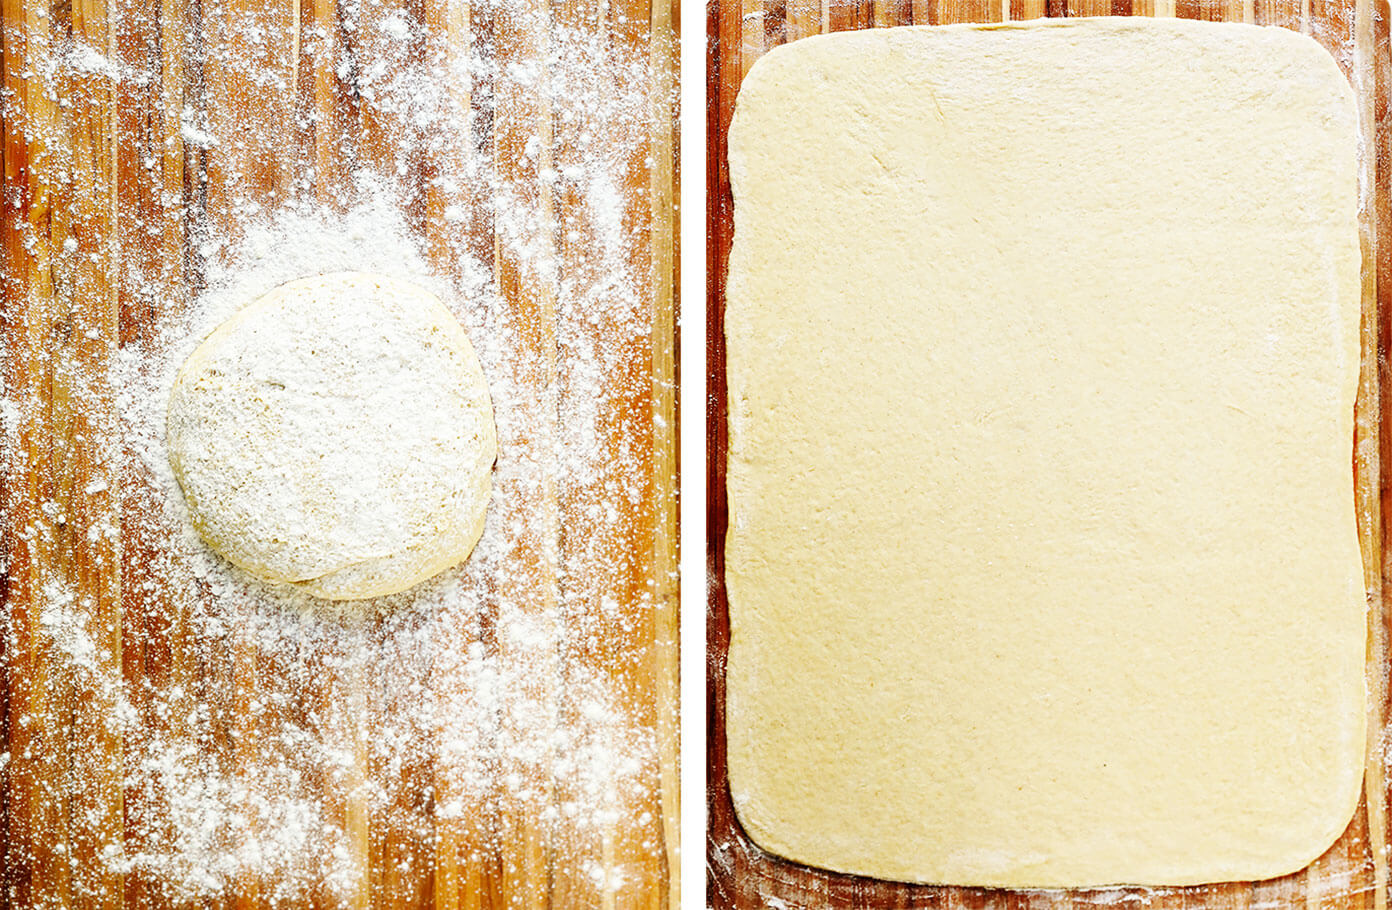 How To Make Swedish Cinnamon Bun Dough